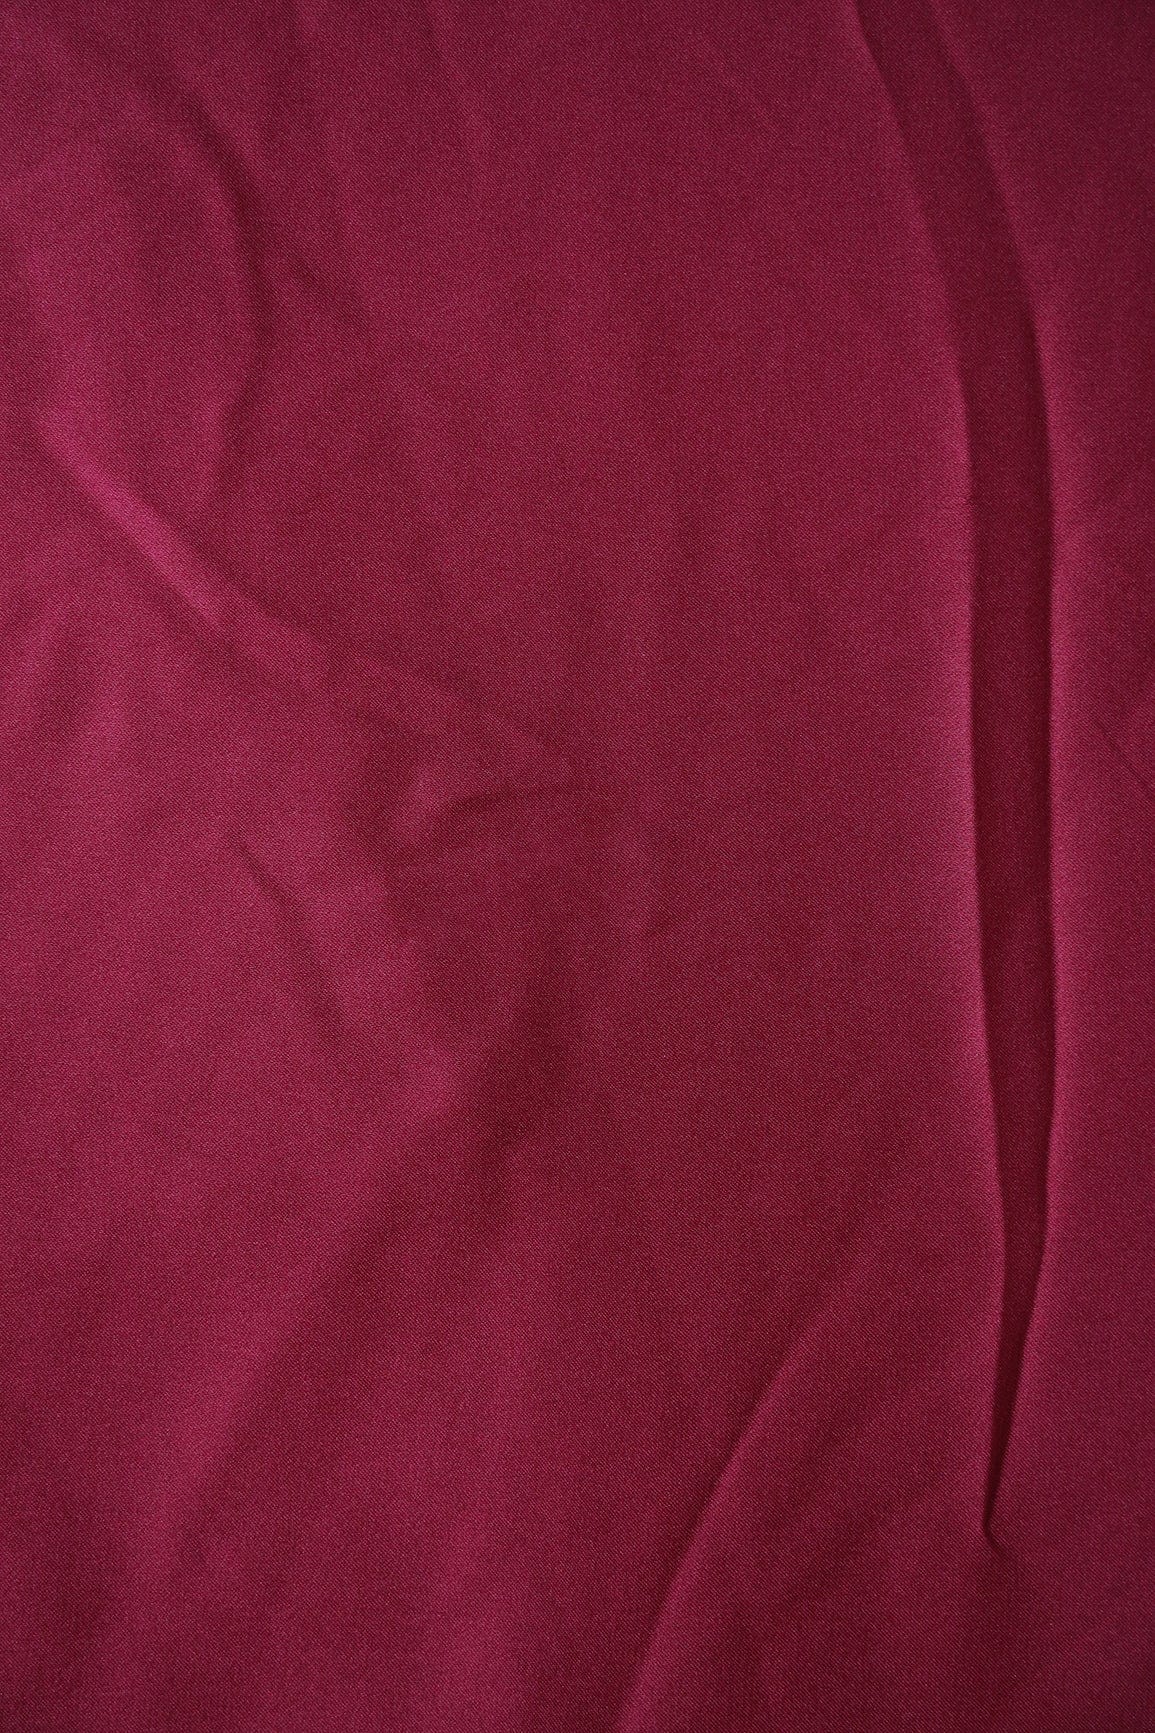 doeraa Plain Fabrics Maroon Dyed Georgette Satin Fabric